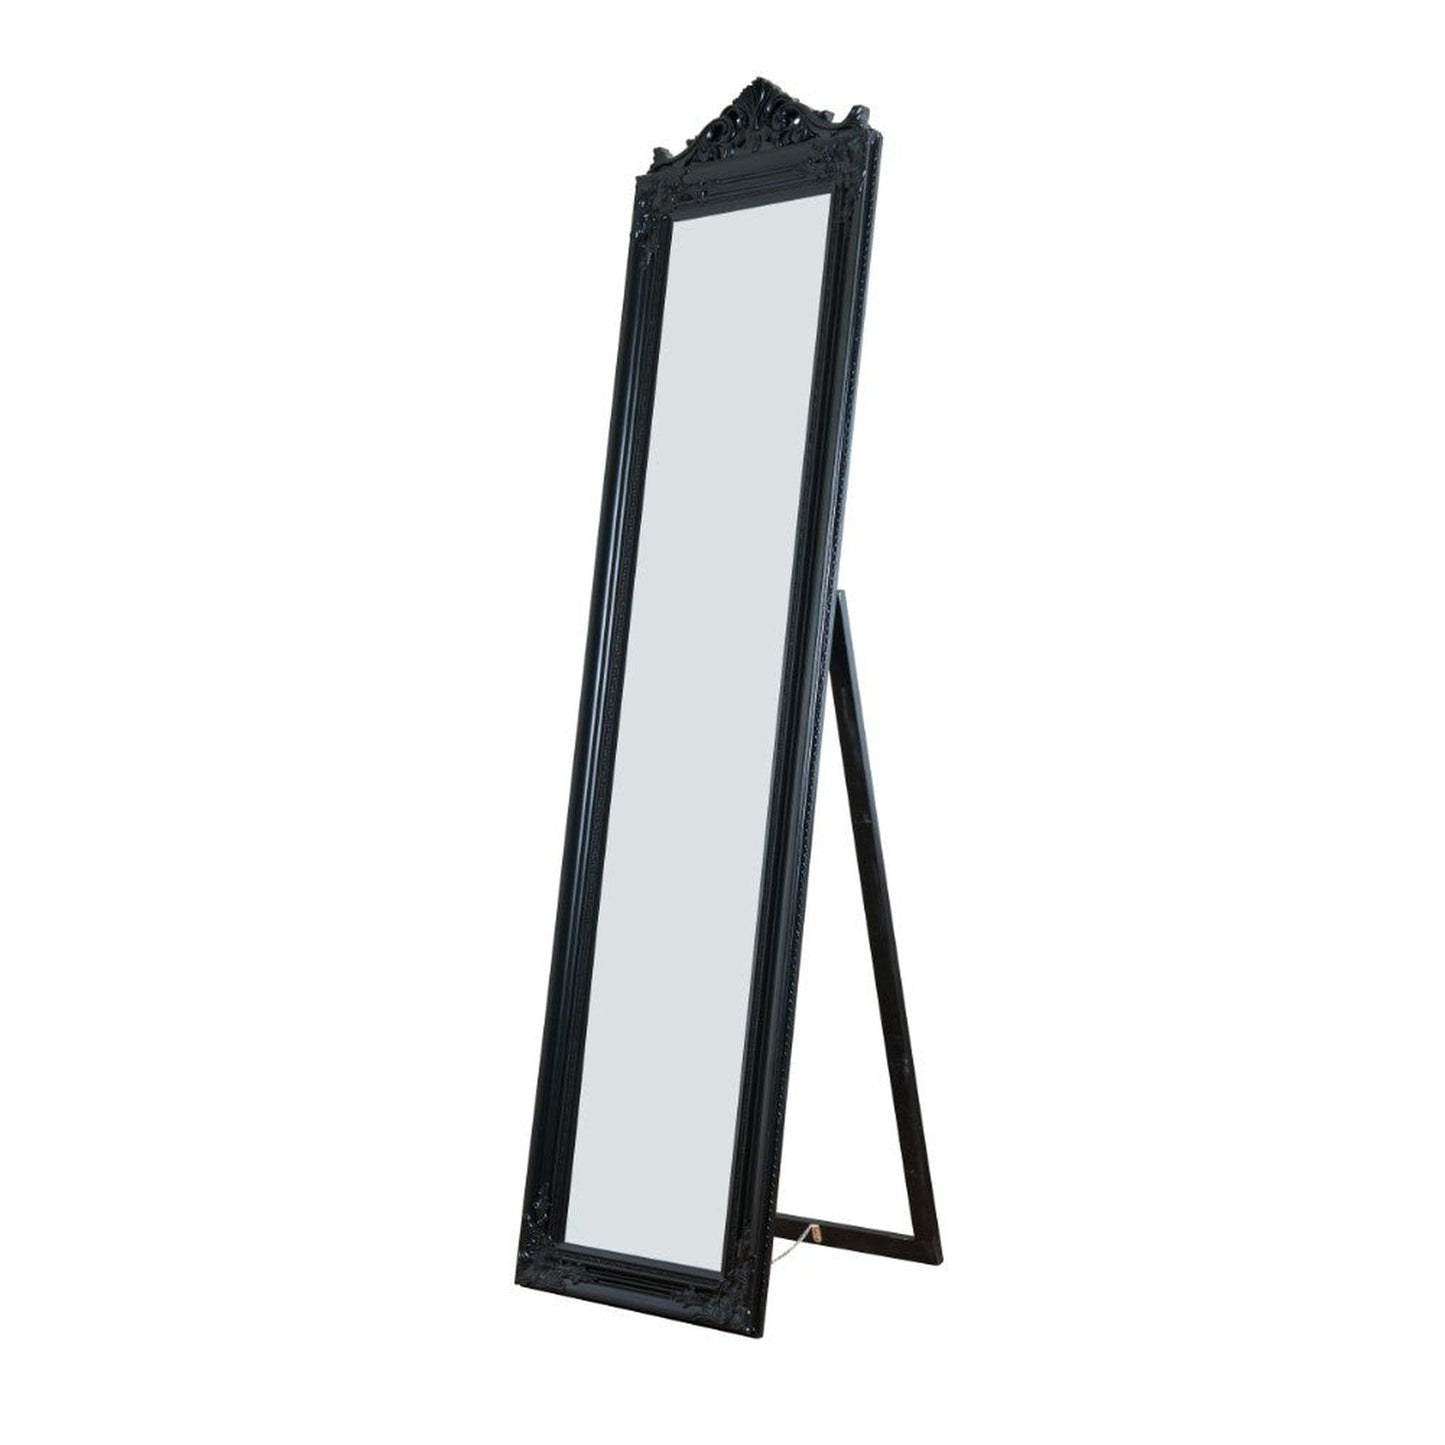 Benzara Camilla 71" Black Full Length Standing Mirror With Decorative Design